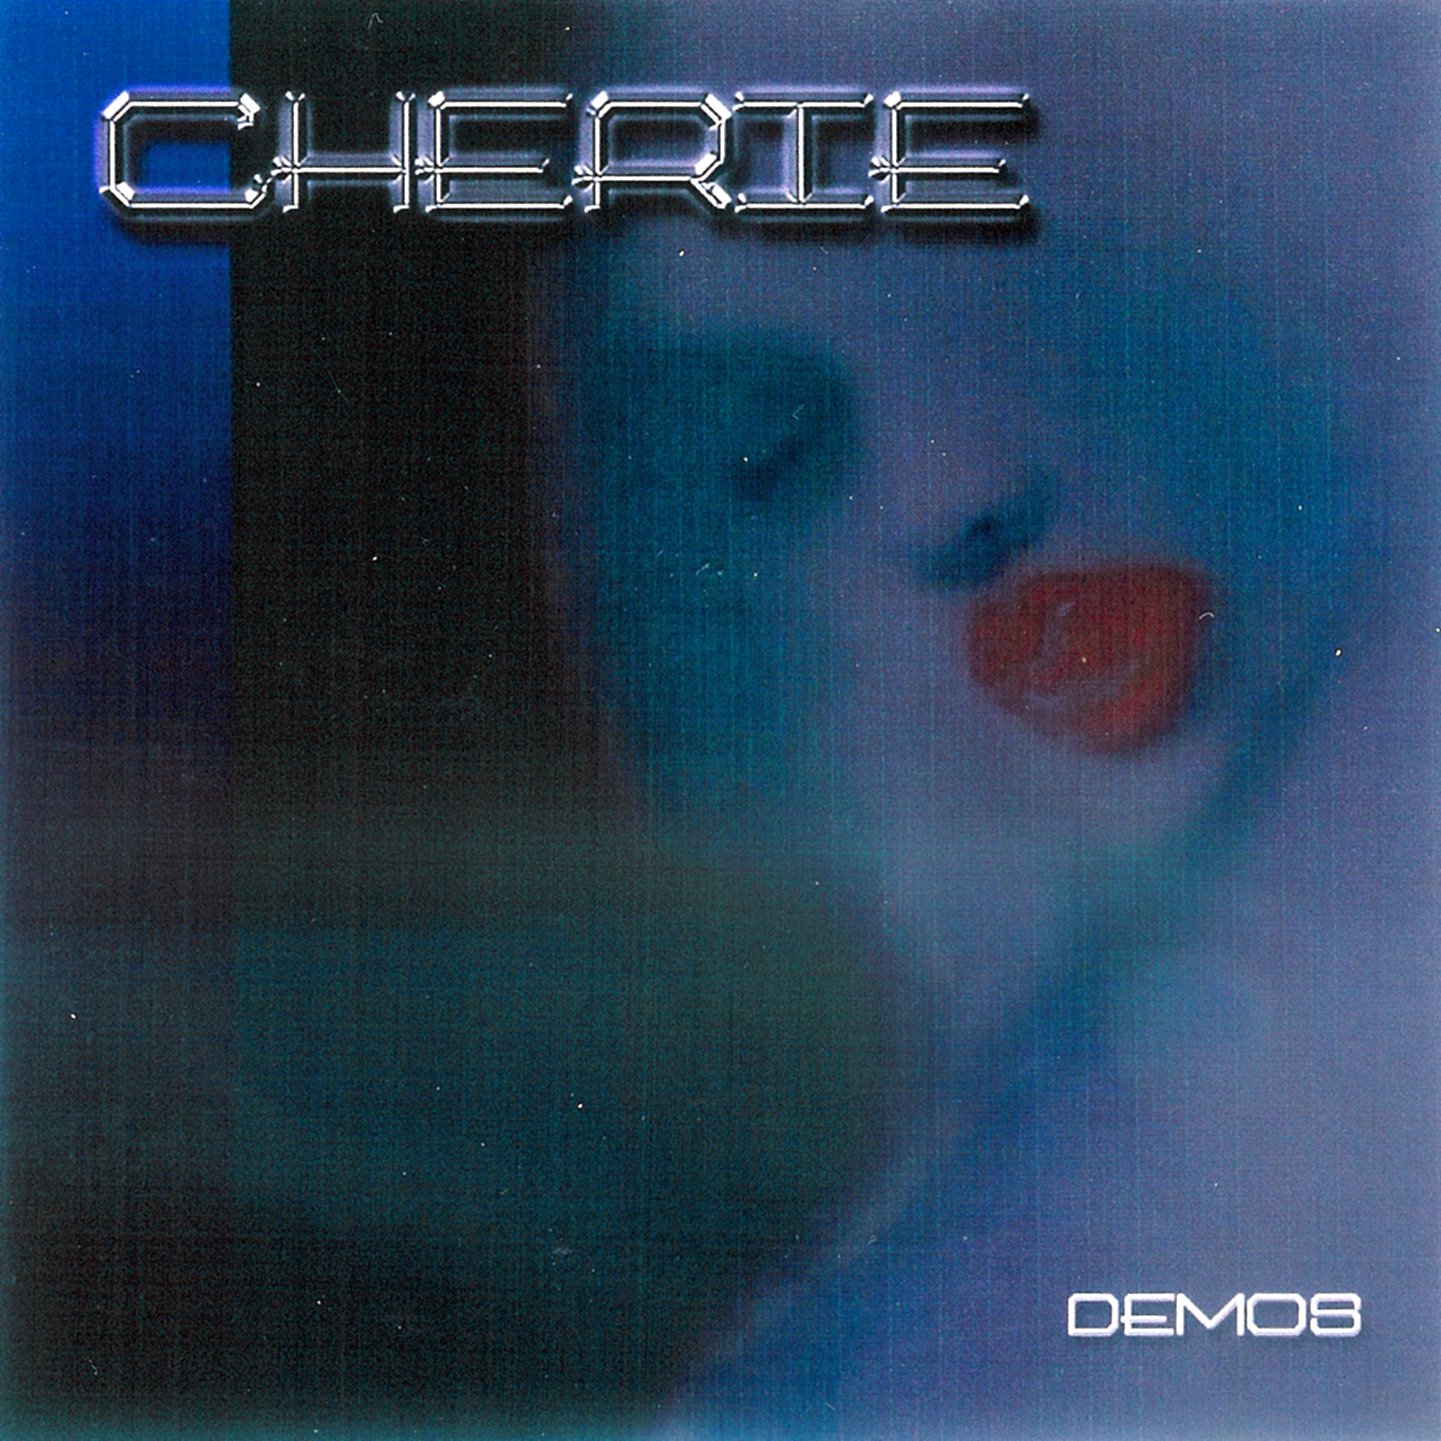 Demos m. Cherie - demos (1990). Demos. Rare Melodic hard Rock 80's.